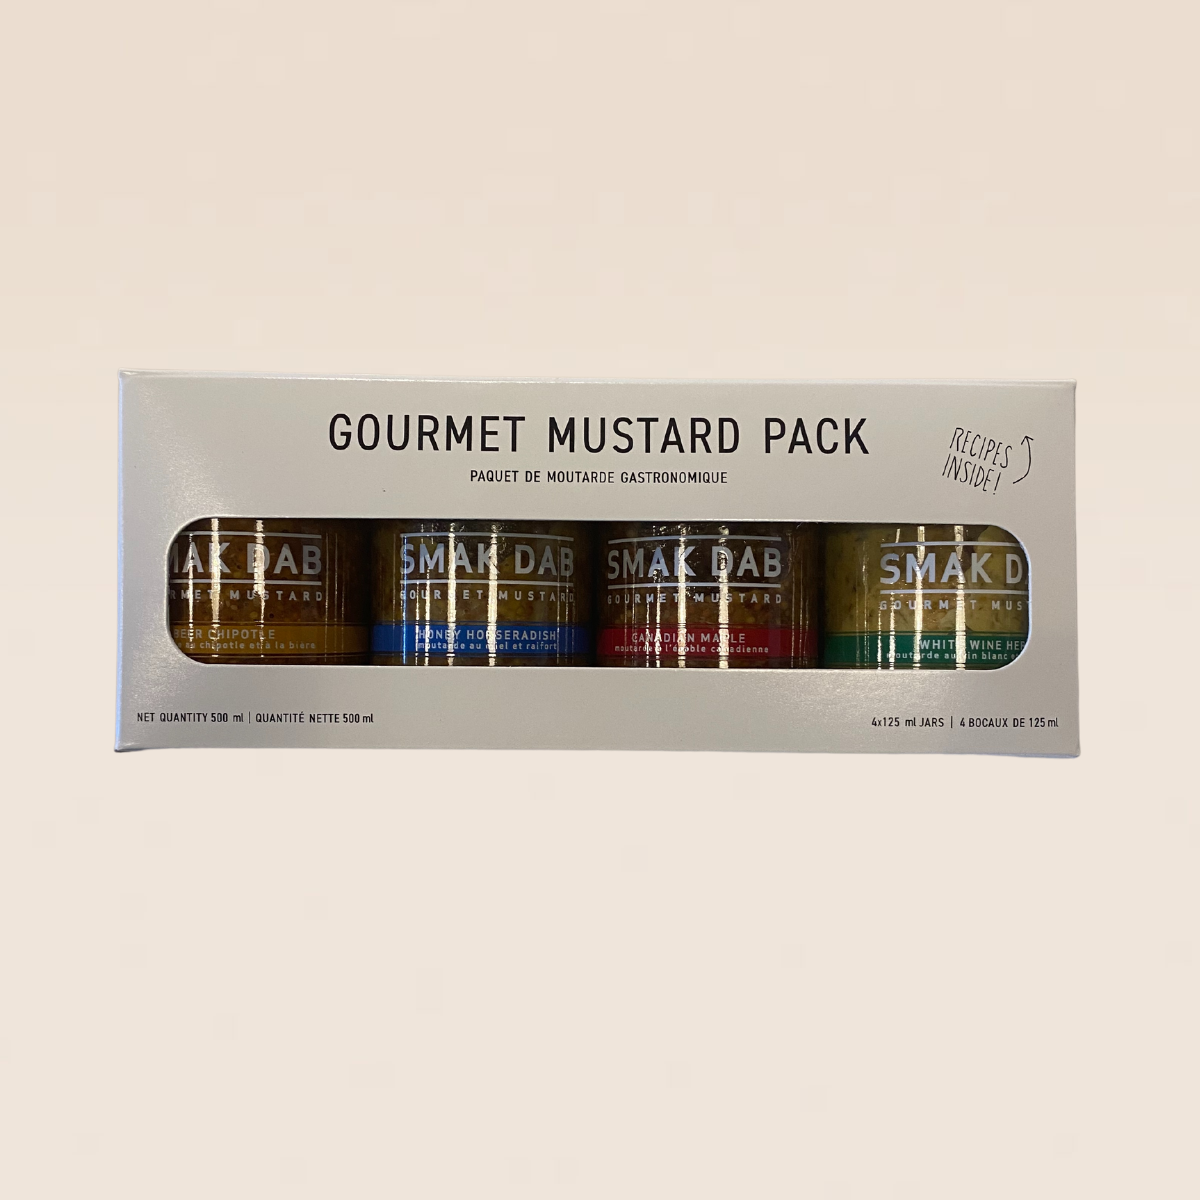 Smak Dab Mustard Flavour Packs